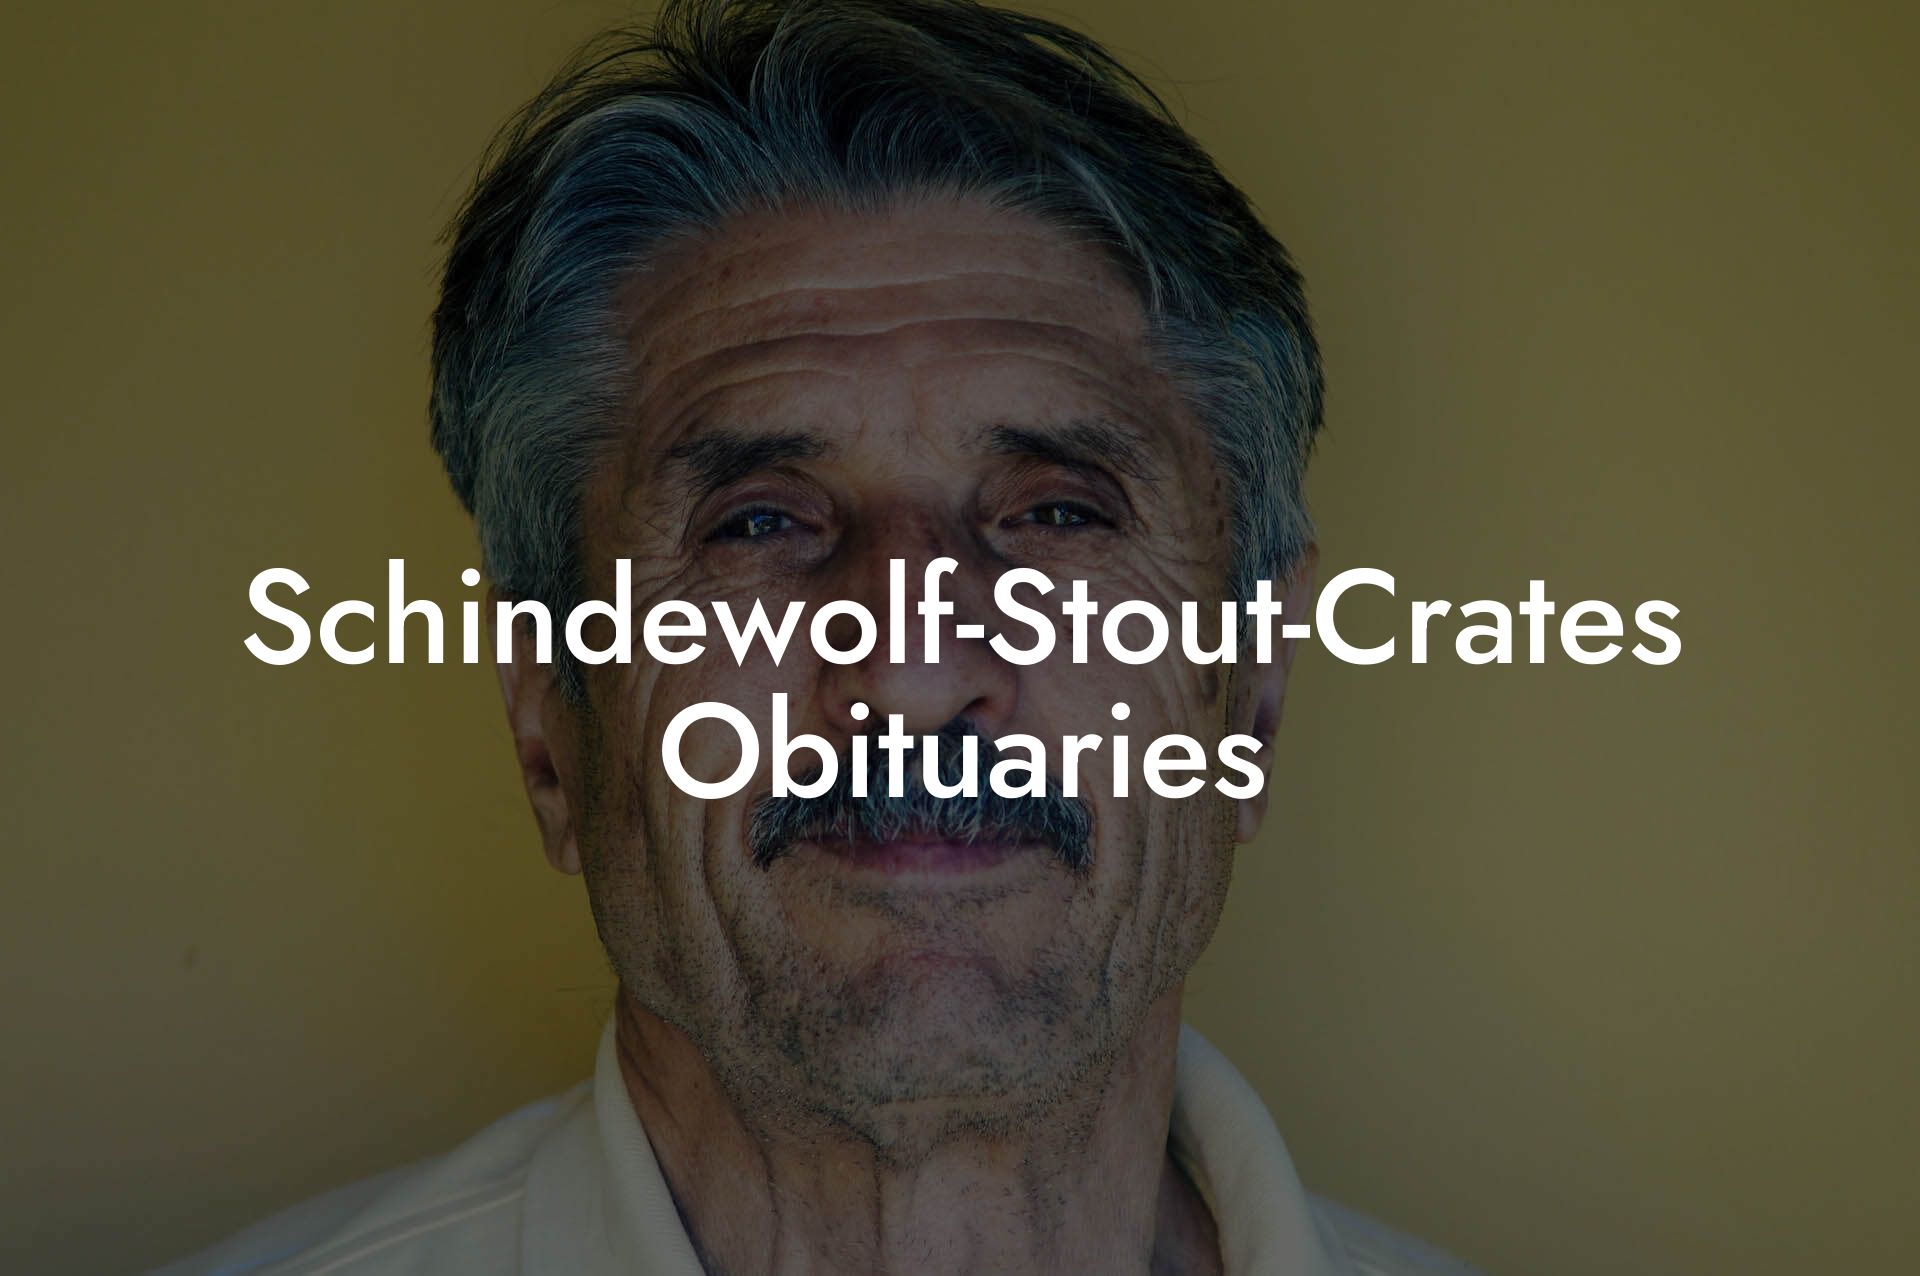 Schindewolf-Stout-Crates Obituaries